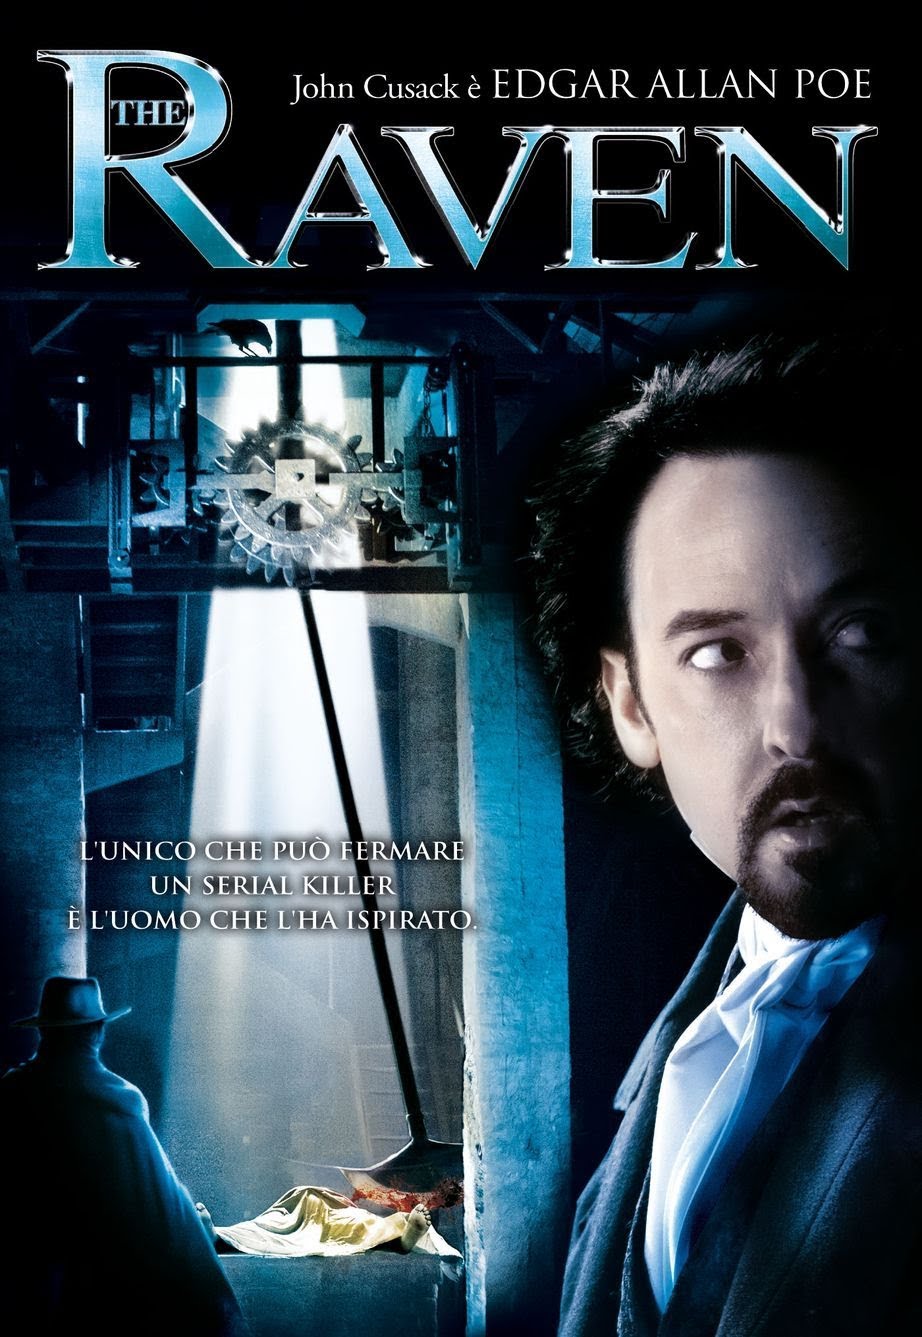 The Raven [HD] (2012)